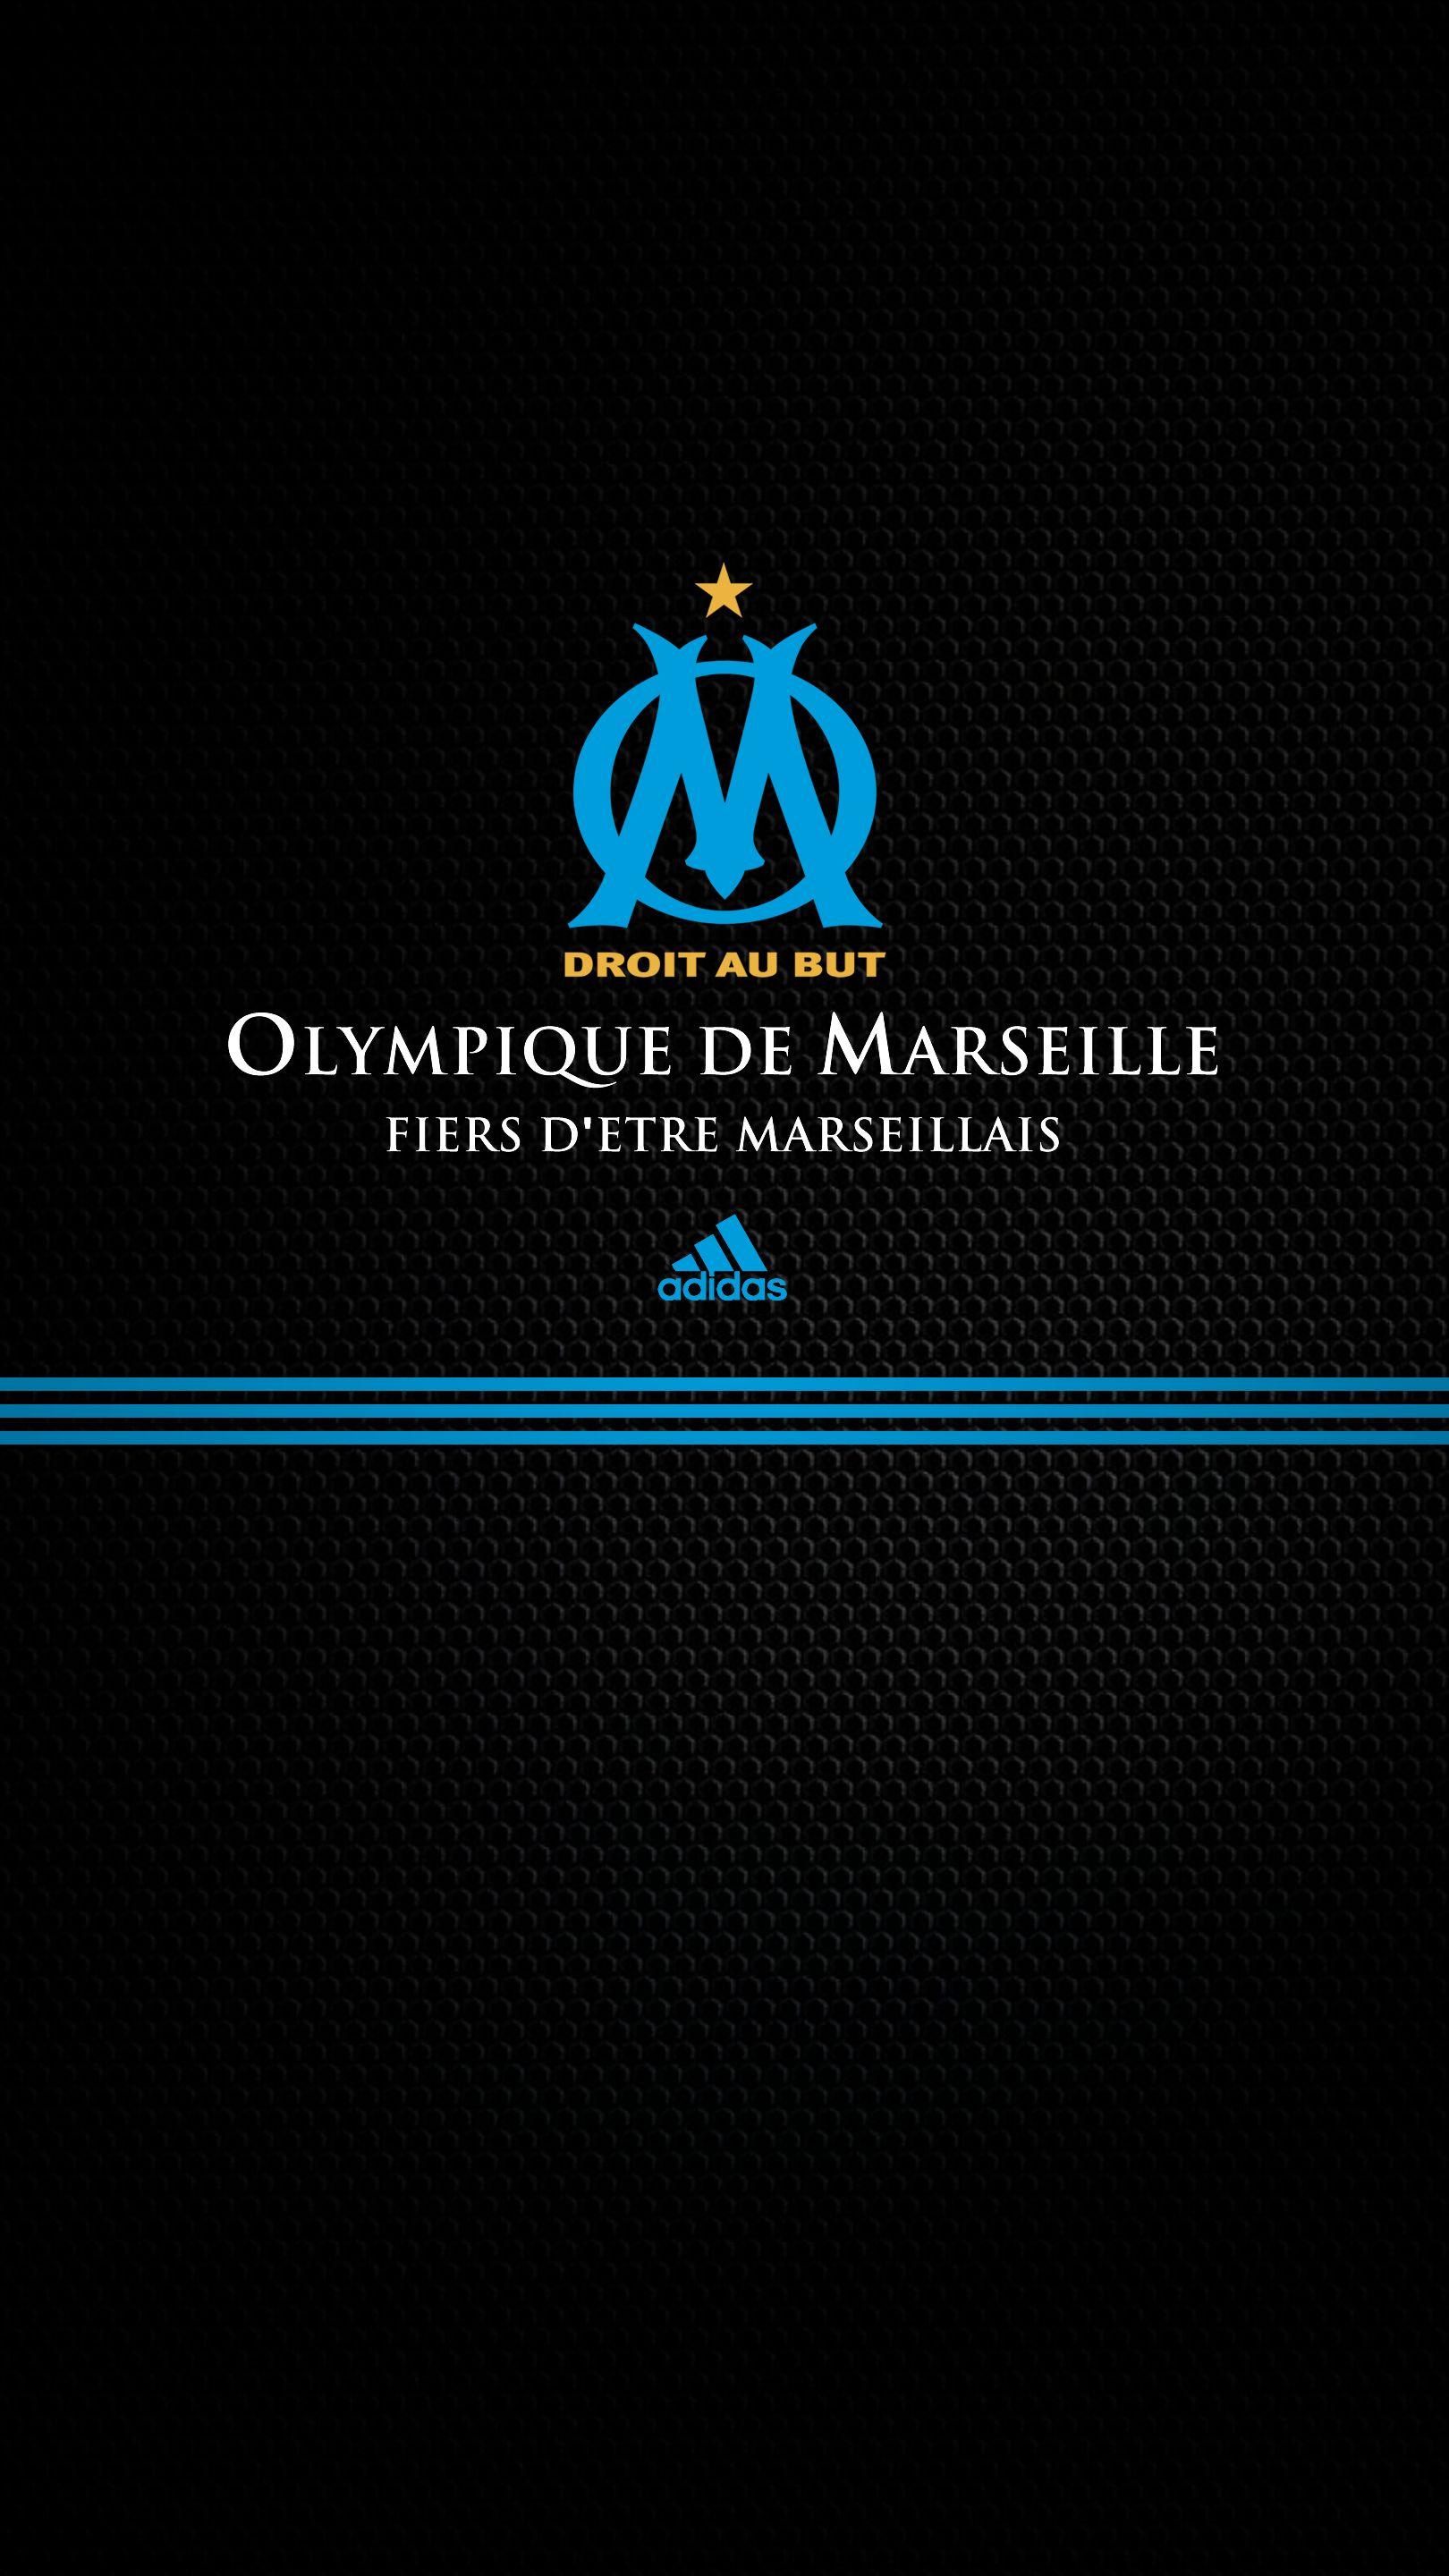 Olympique de Marseille soccer sports wallpaper, 1920x1080, 1186989